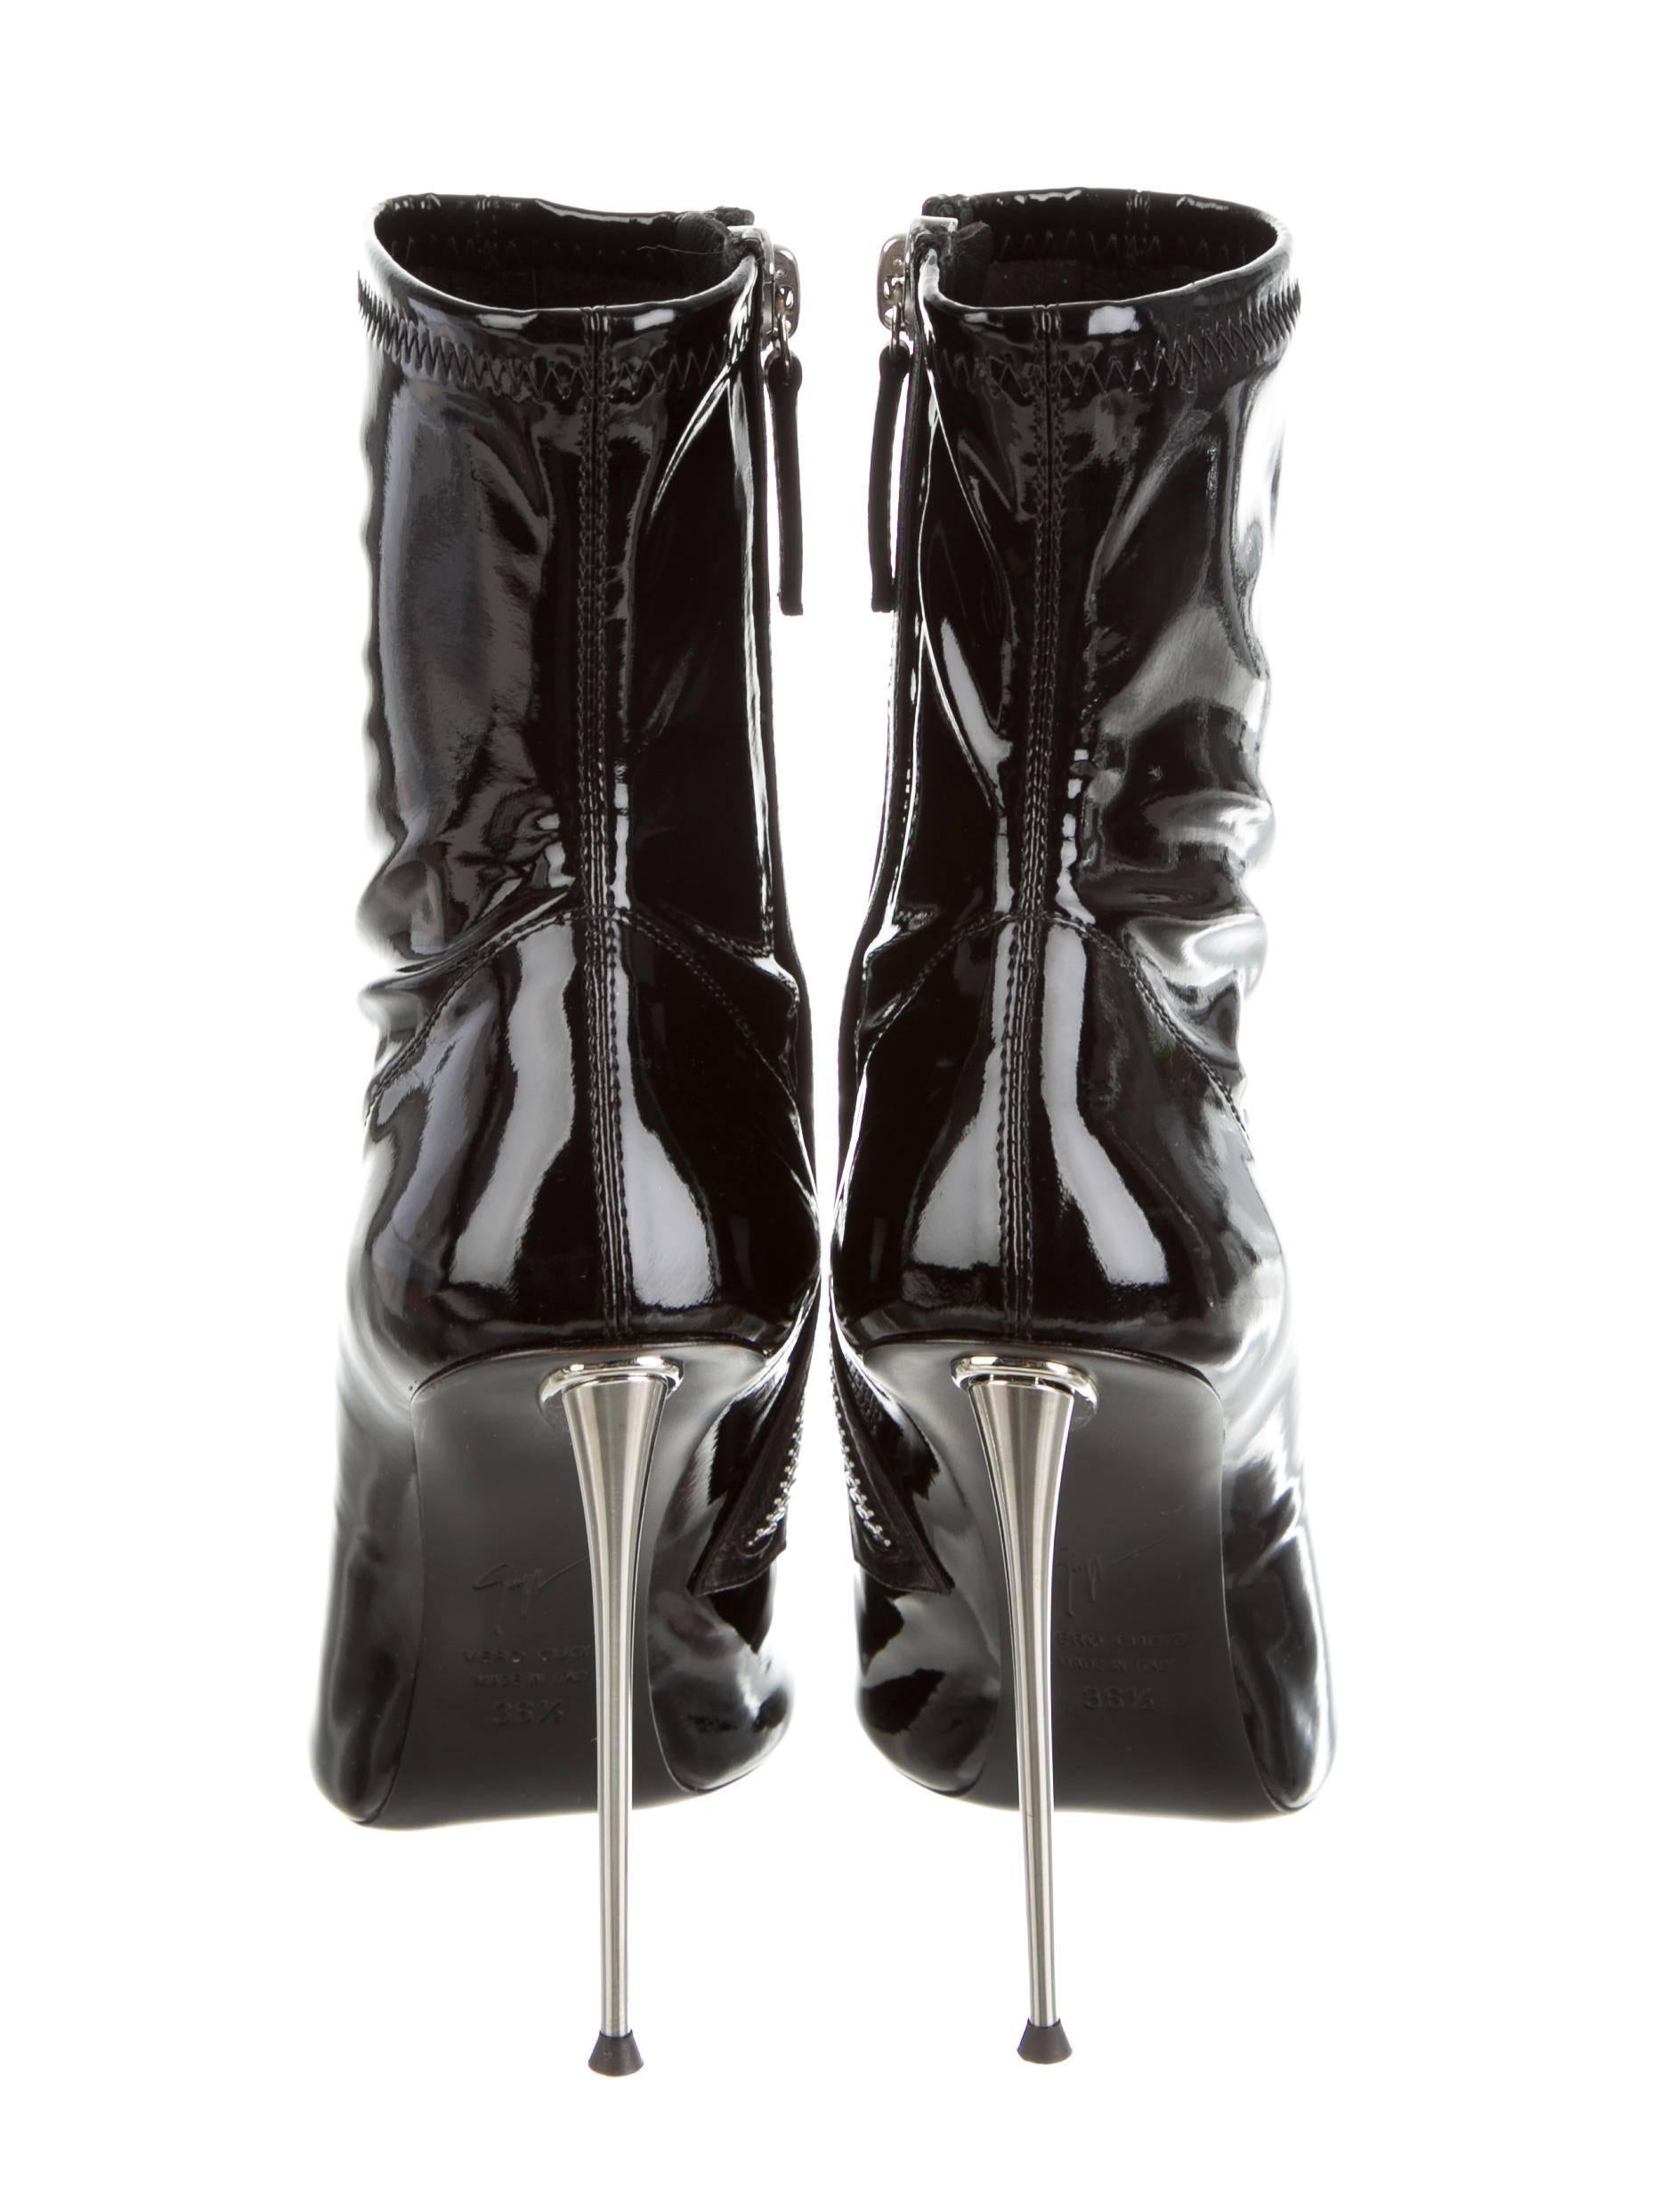 Women's Giuseppe Zanotti NEW Black Patent Leather Silver Stiletto Heels Booties in Box